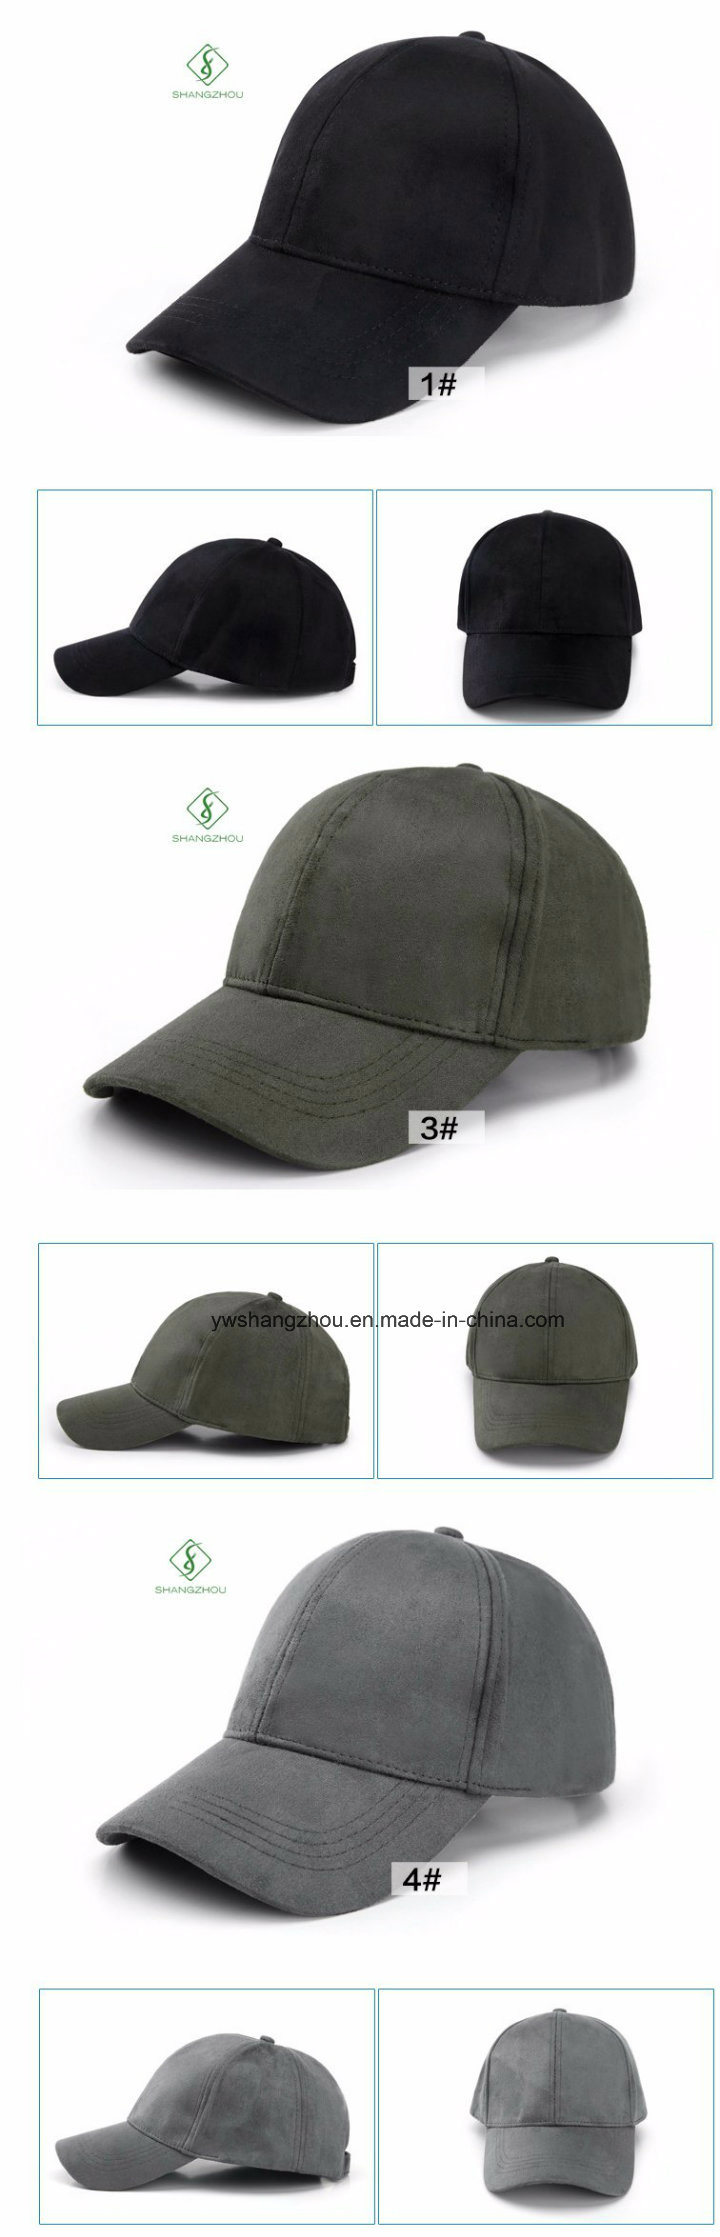 2017 New Korean High-Grade Suede Baseball Cap fashion Peaked Cap